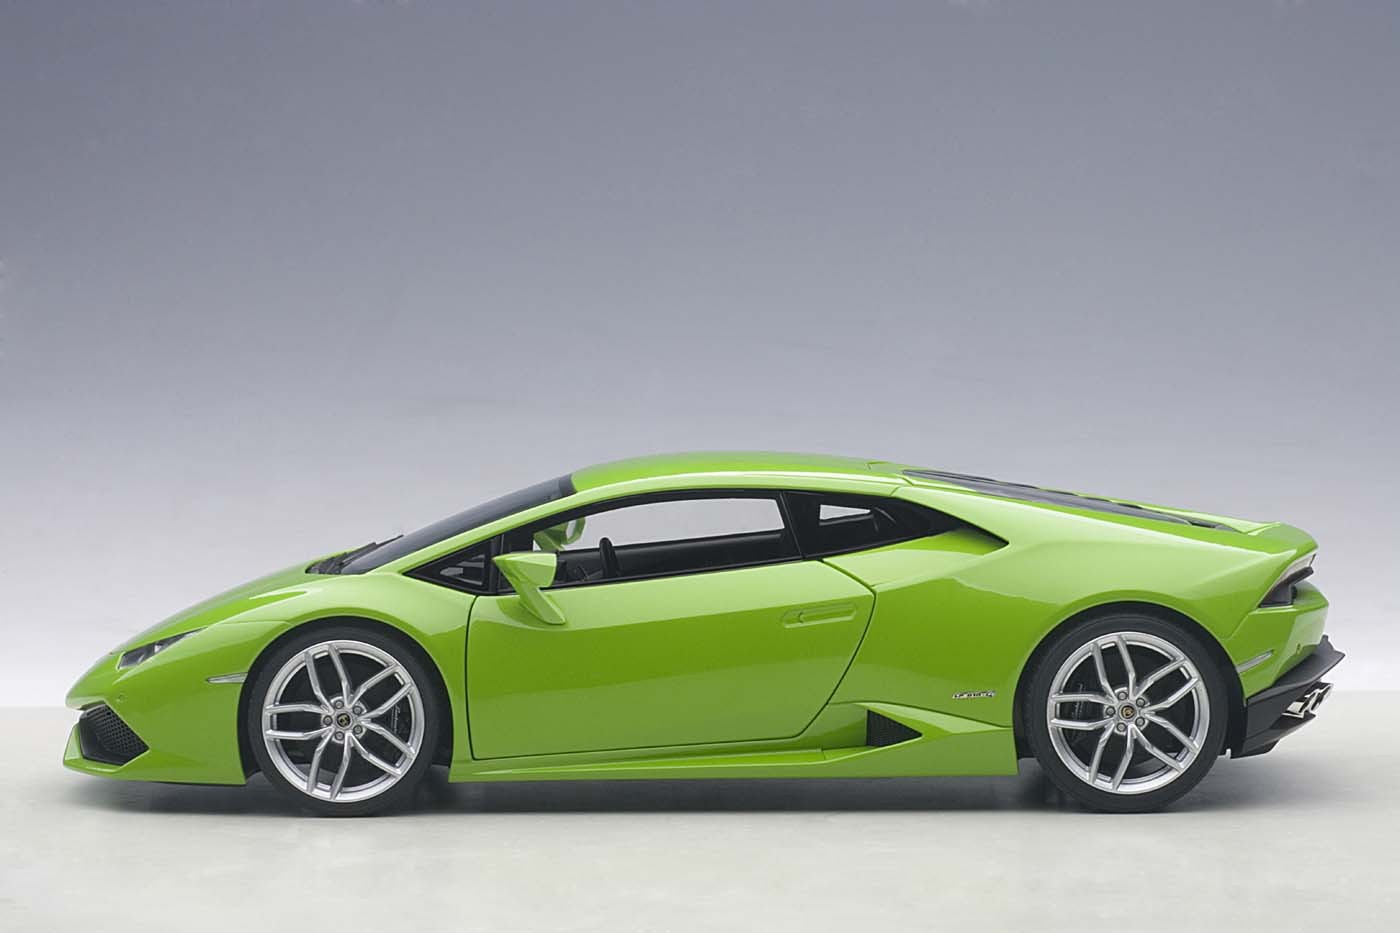 Sale! Metalic Green Lamborghini Huracan LP610-4 Die-Cast AUTOart 74605  Scale 1:18